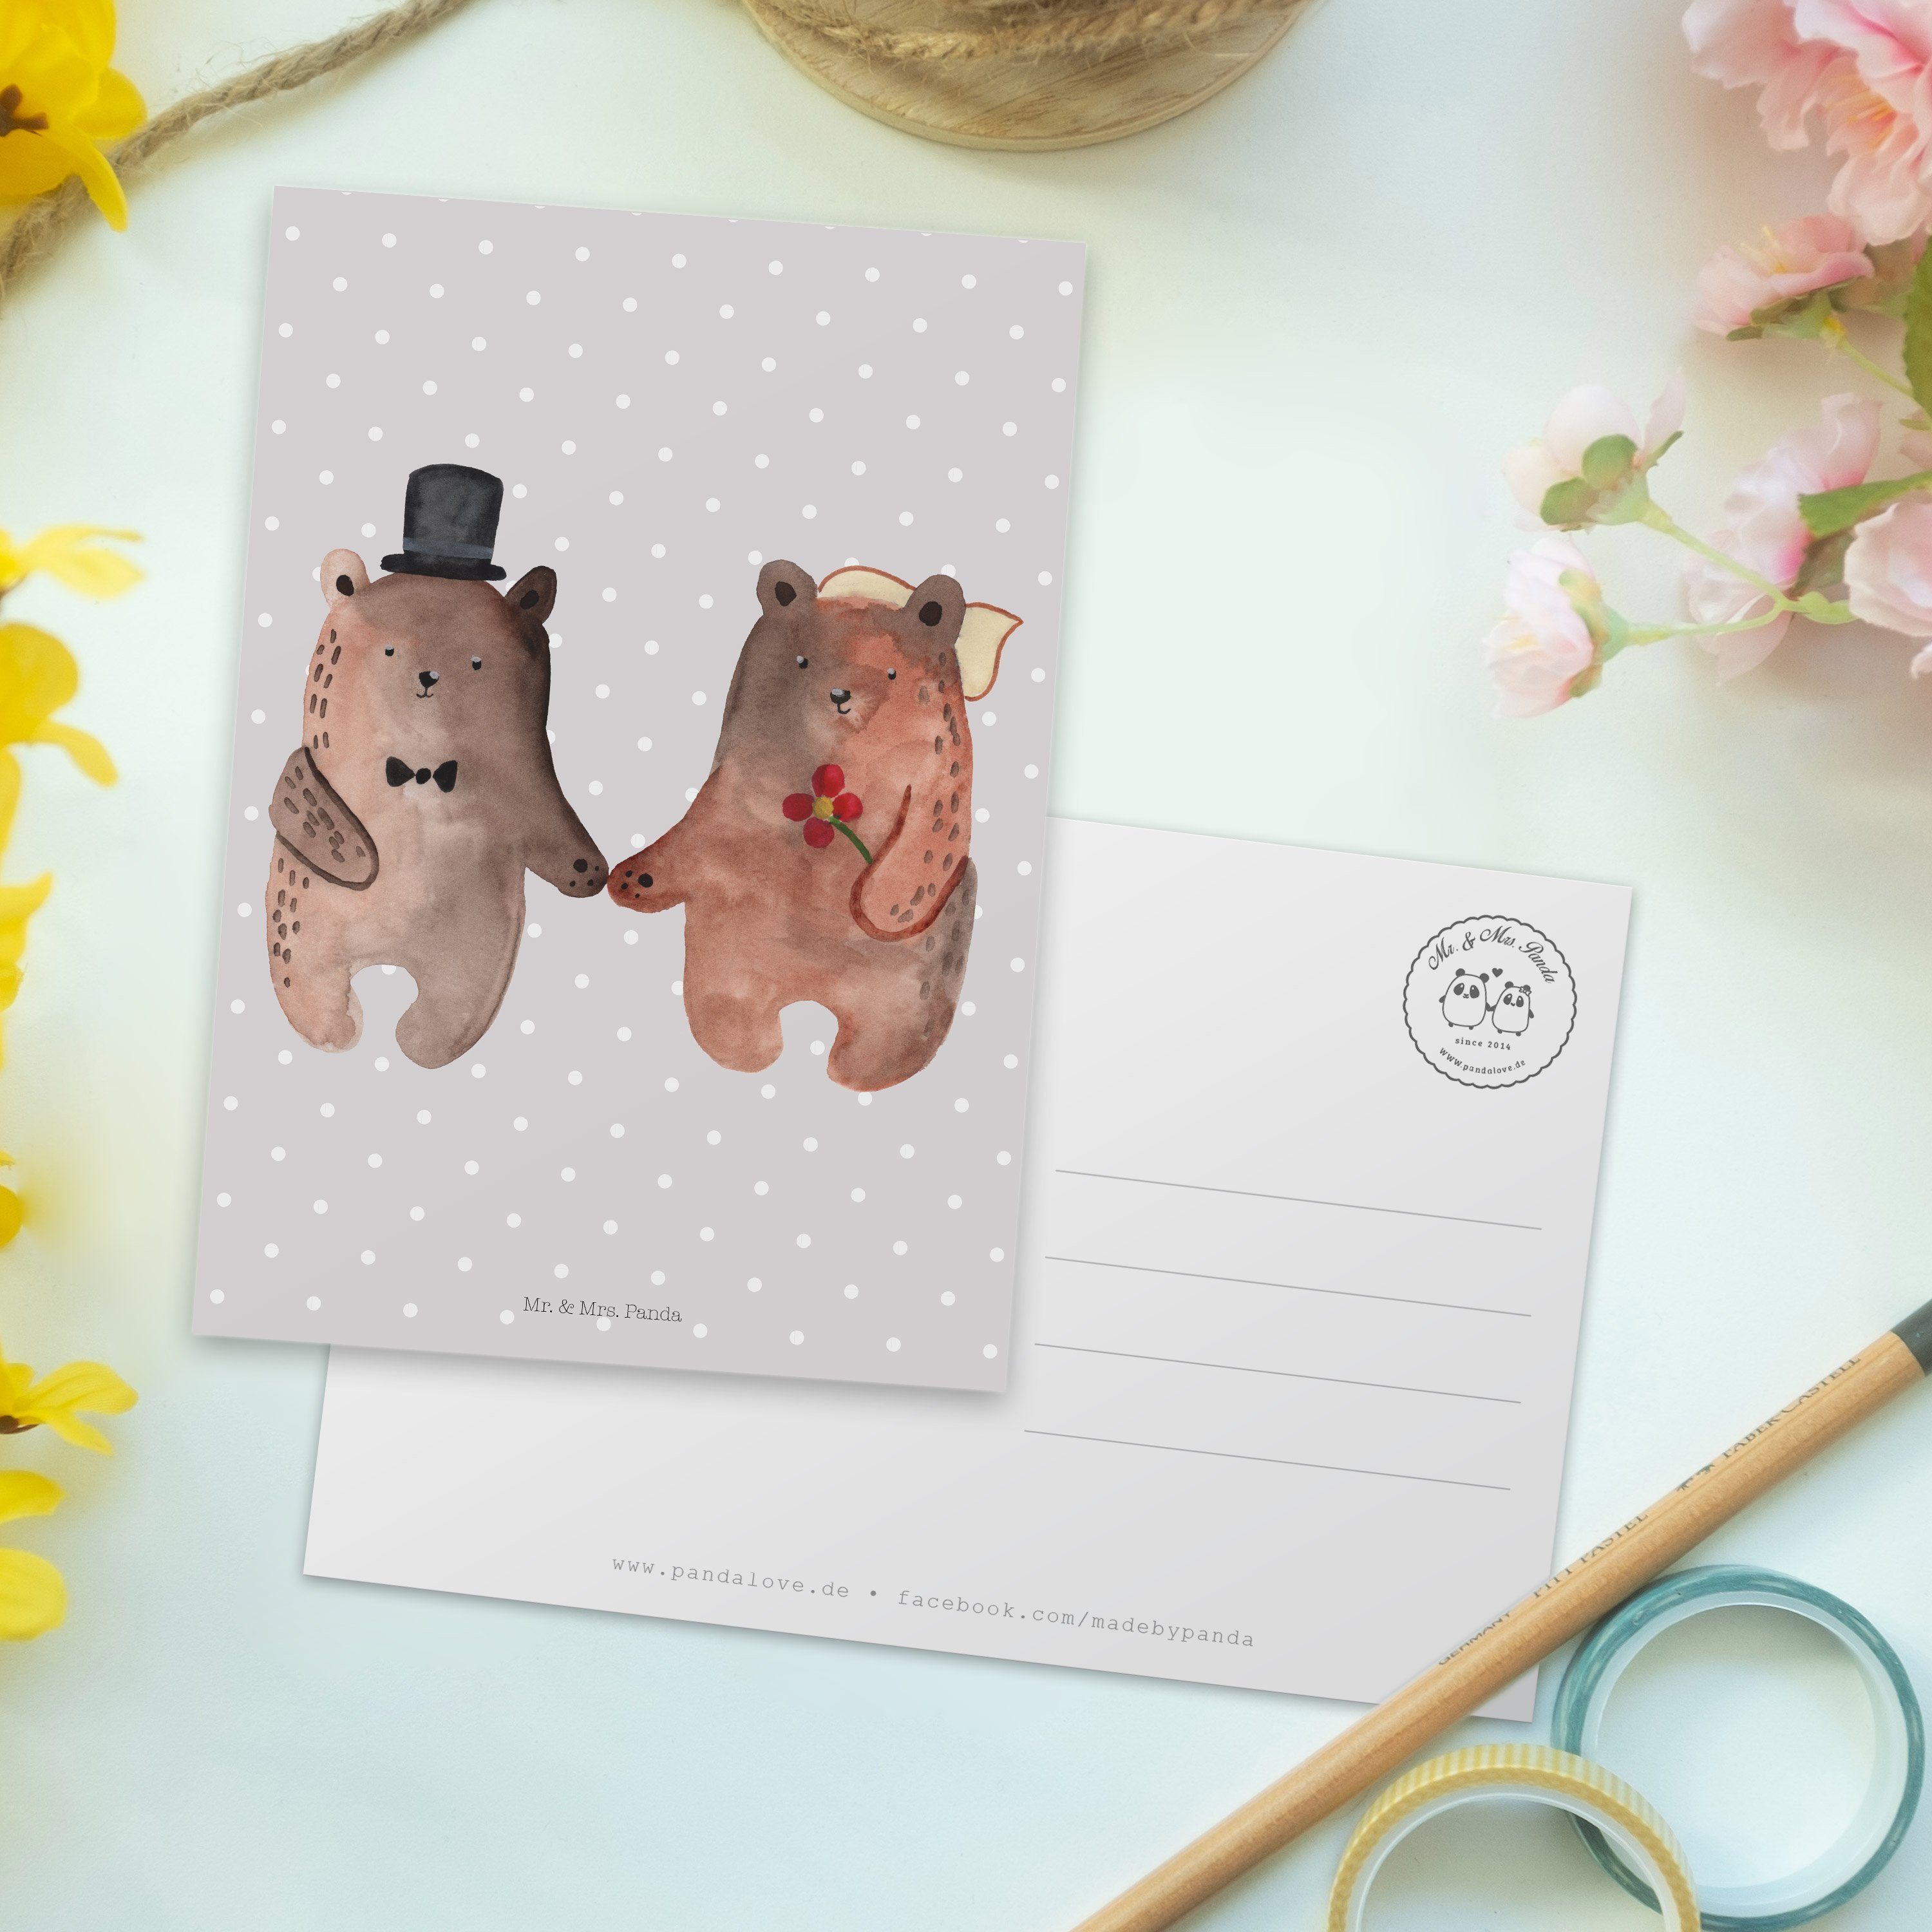 Panda Mr. Postkarte Geschenk, Pastell Teddyb Geburtstagskarte, - Mrs. Heirat & Grau - Bär Teddy,